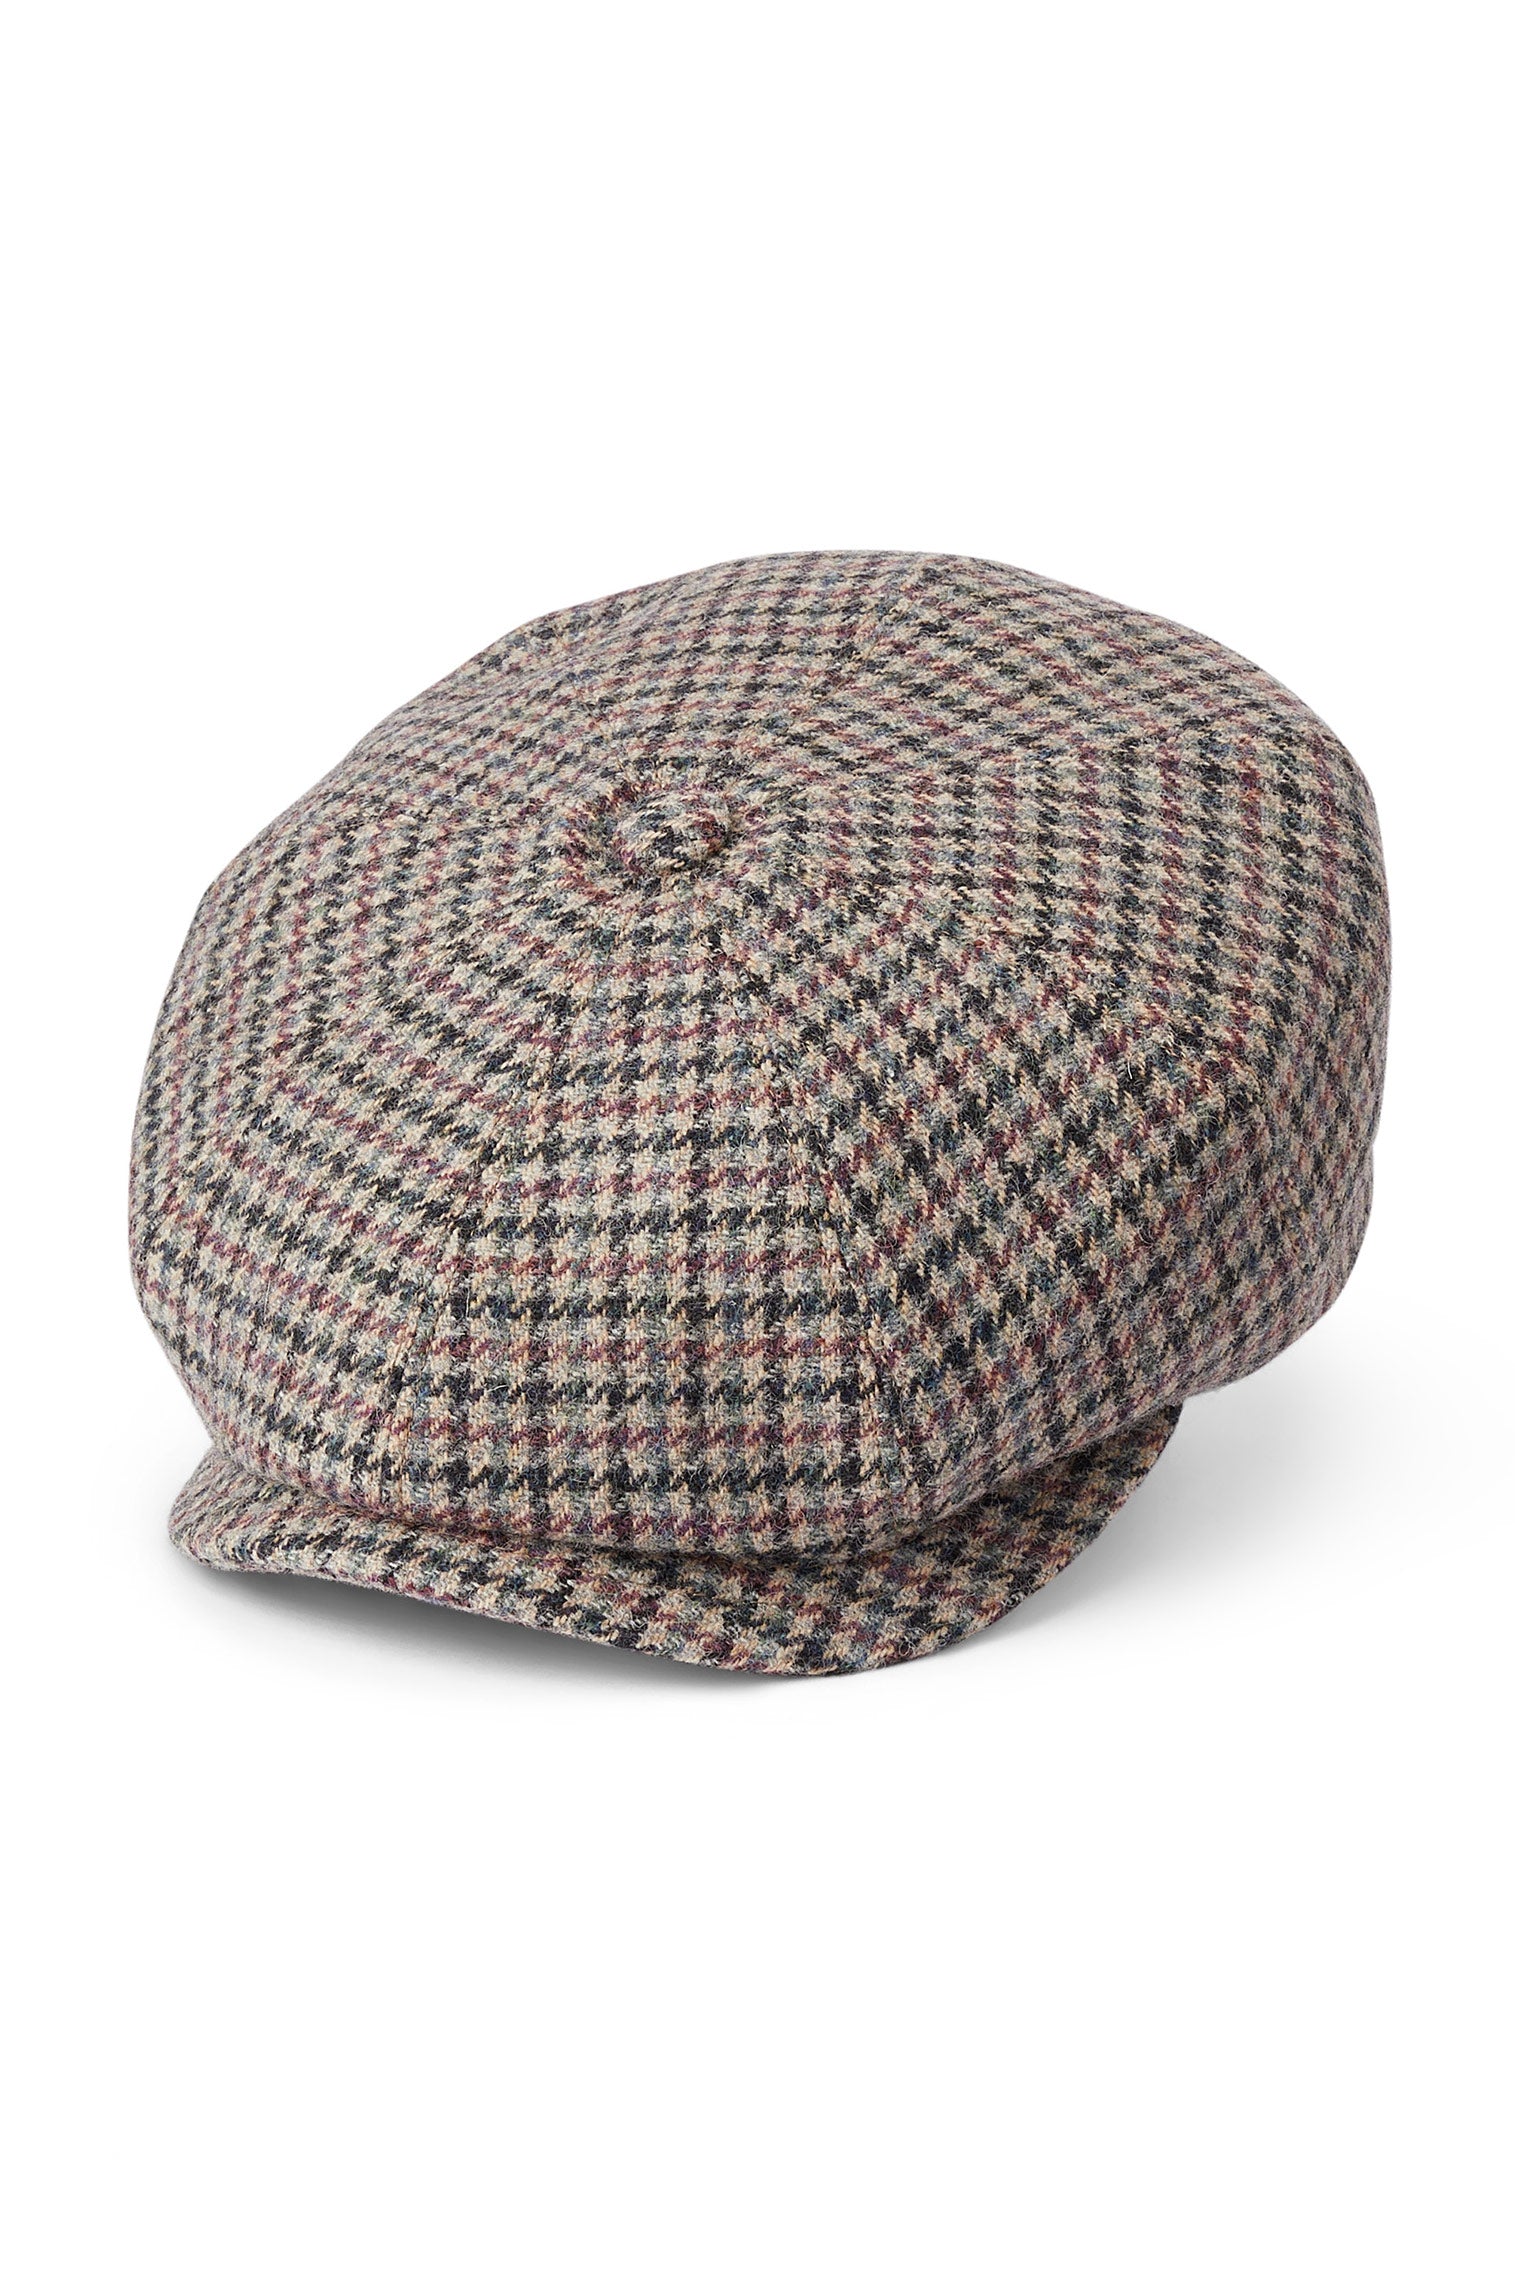 Whitebridge Mini-Check Bakerboy Cap - Hats for Oval Face Shapes - Lock & Co. Hatters London UK